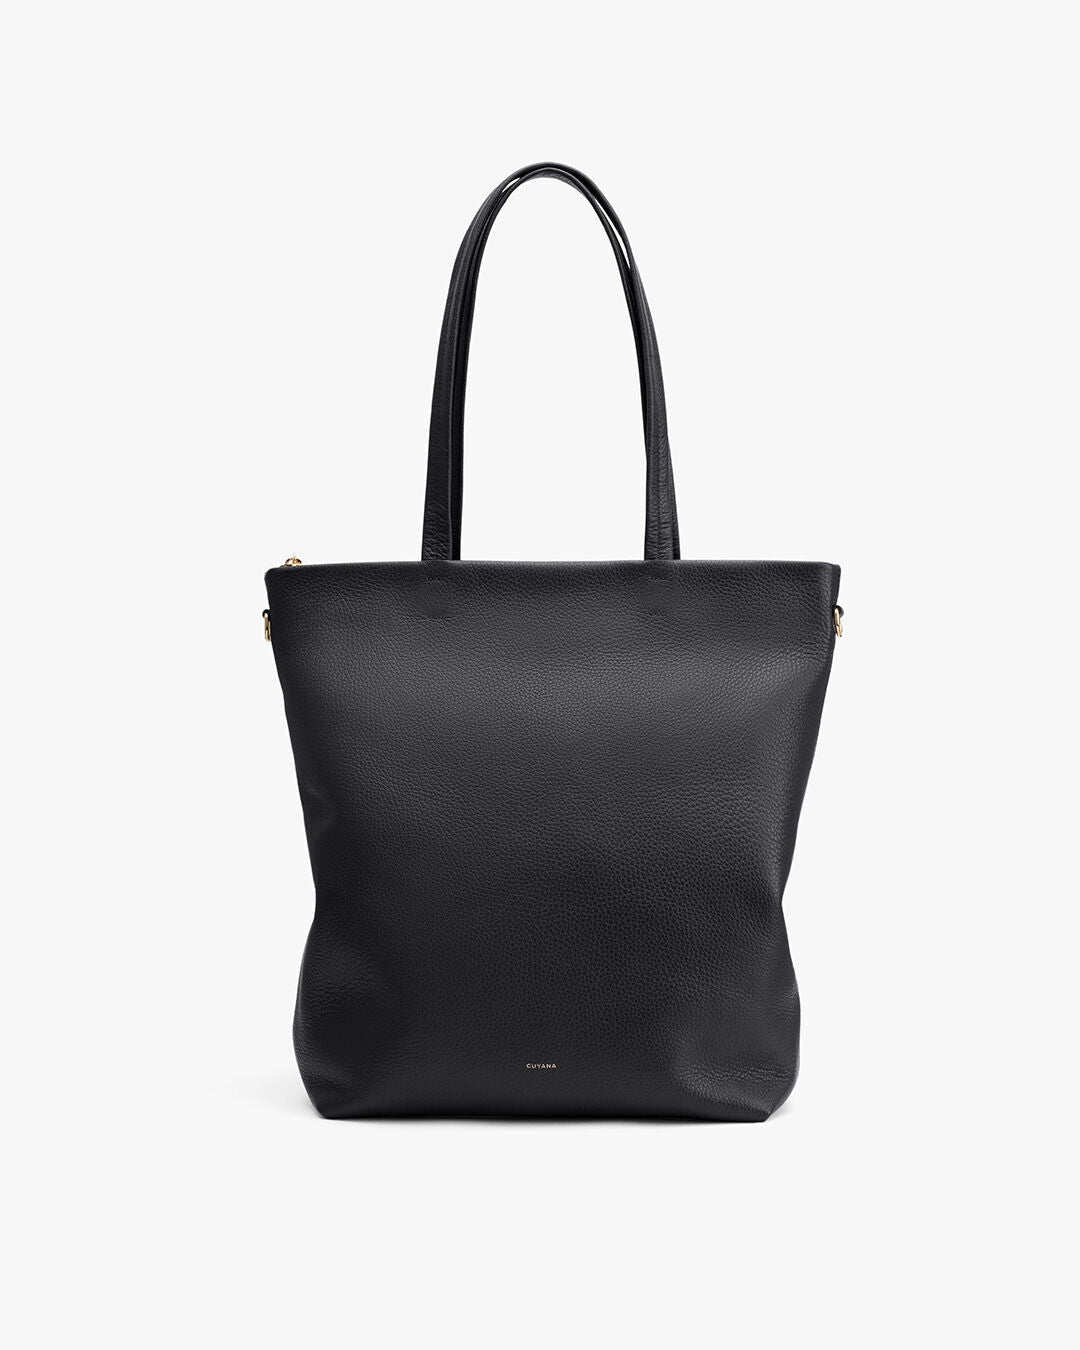 Trinity Ranch Black Concealed Carry Handbag